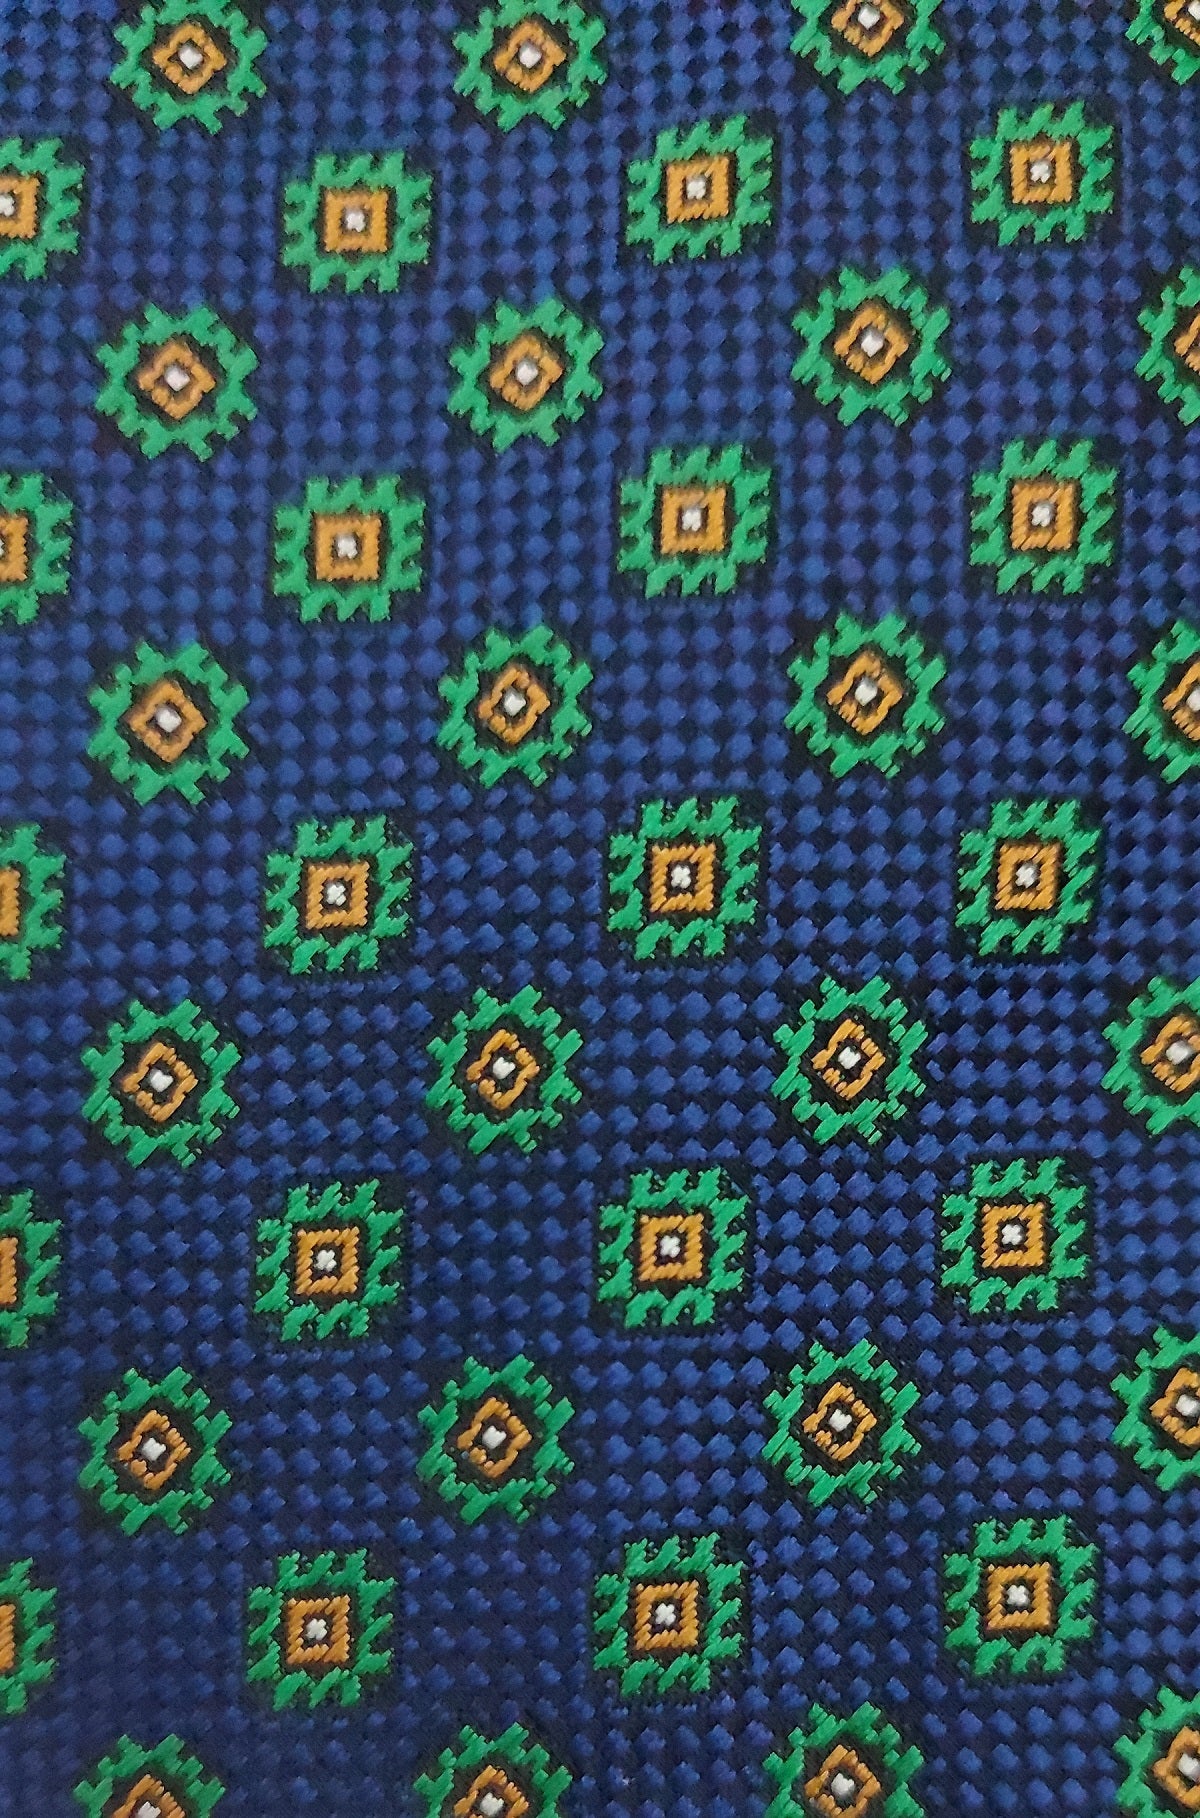 Necktie/Green Flowers Blue Polka Dot